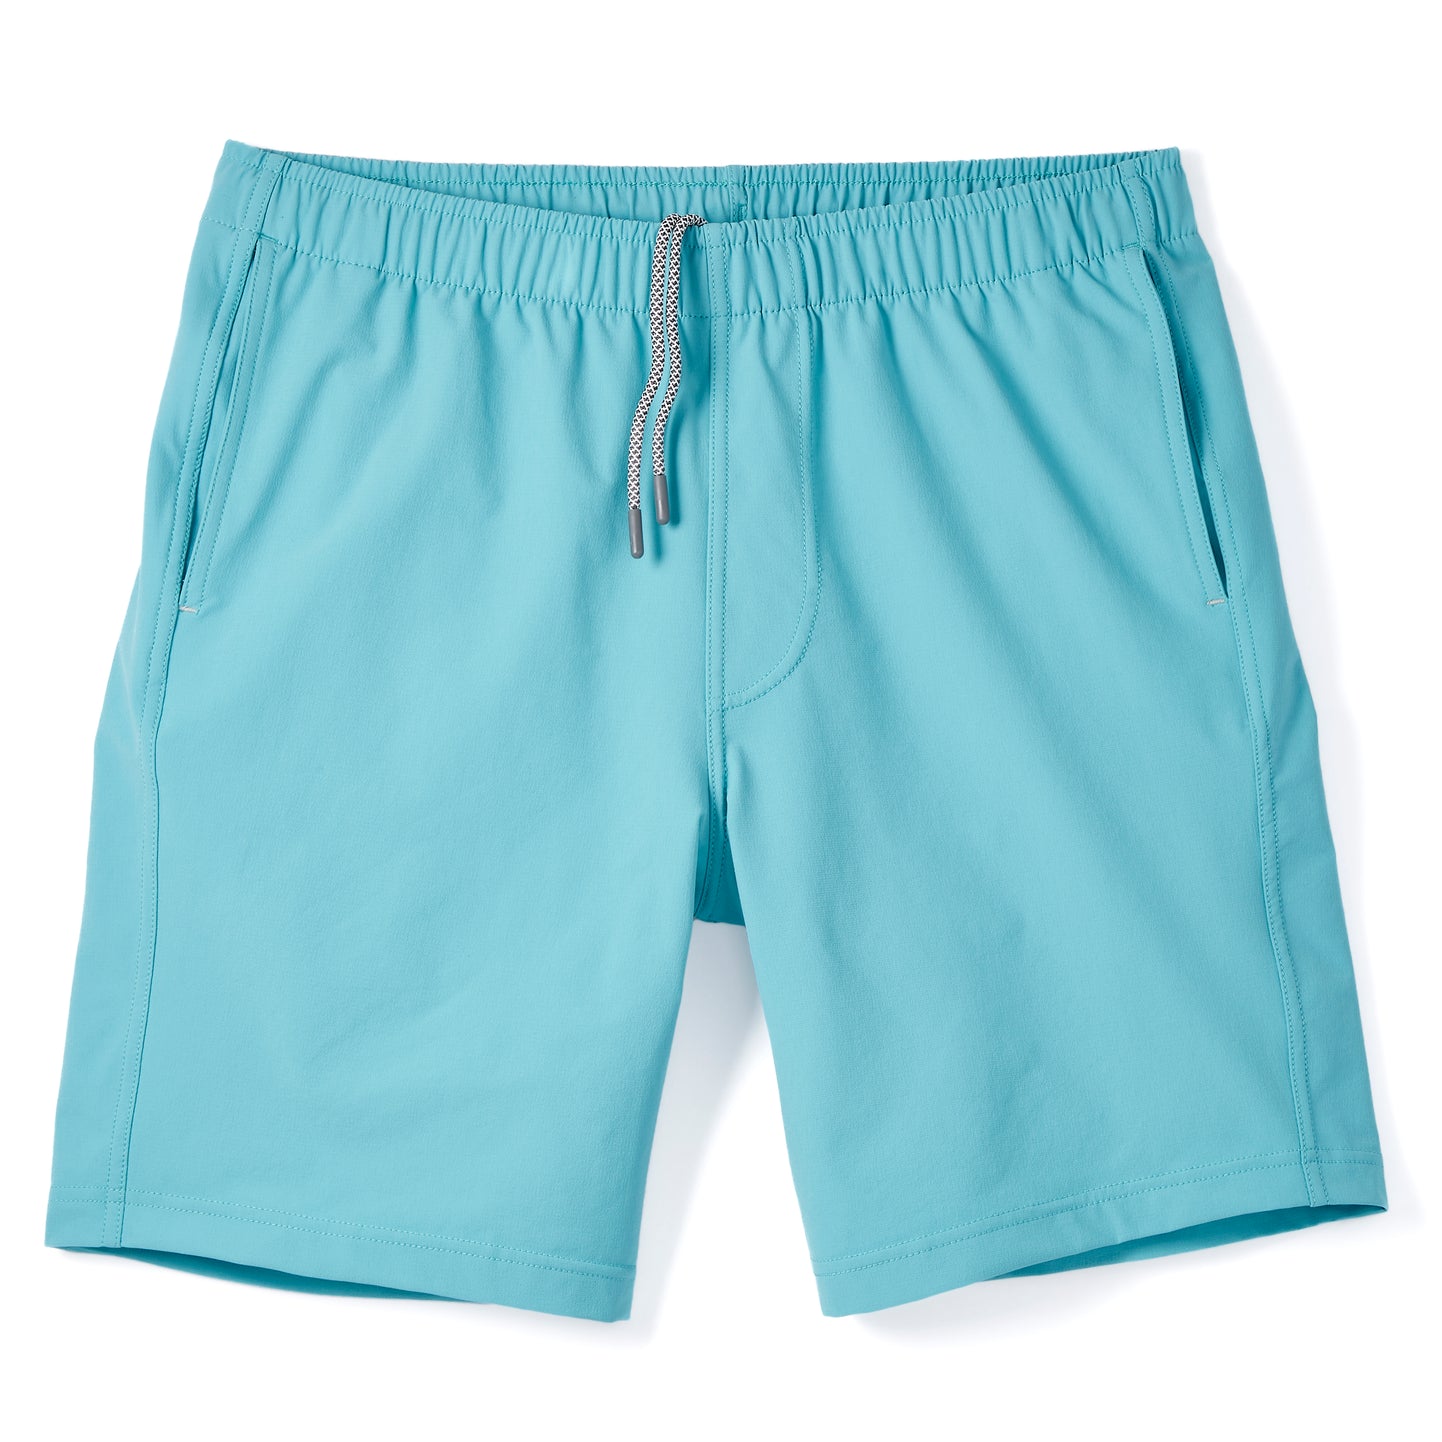 Everyday Short in Turquoise Tonic Blue | Athletic Shorts | Myles ...